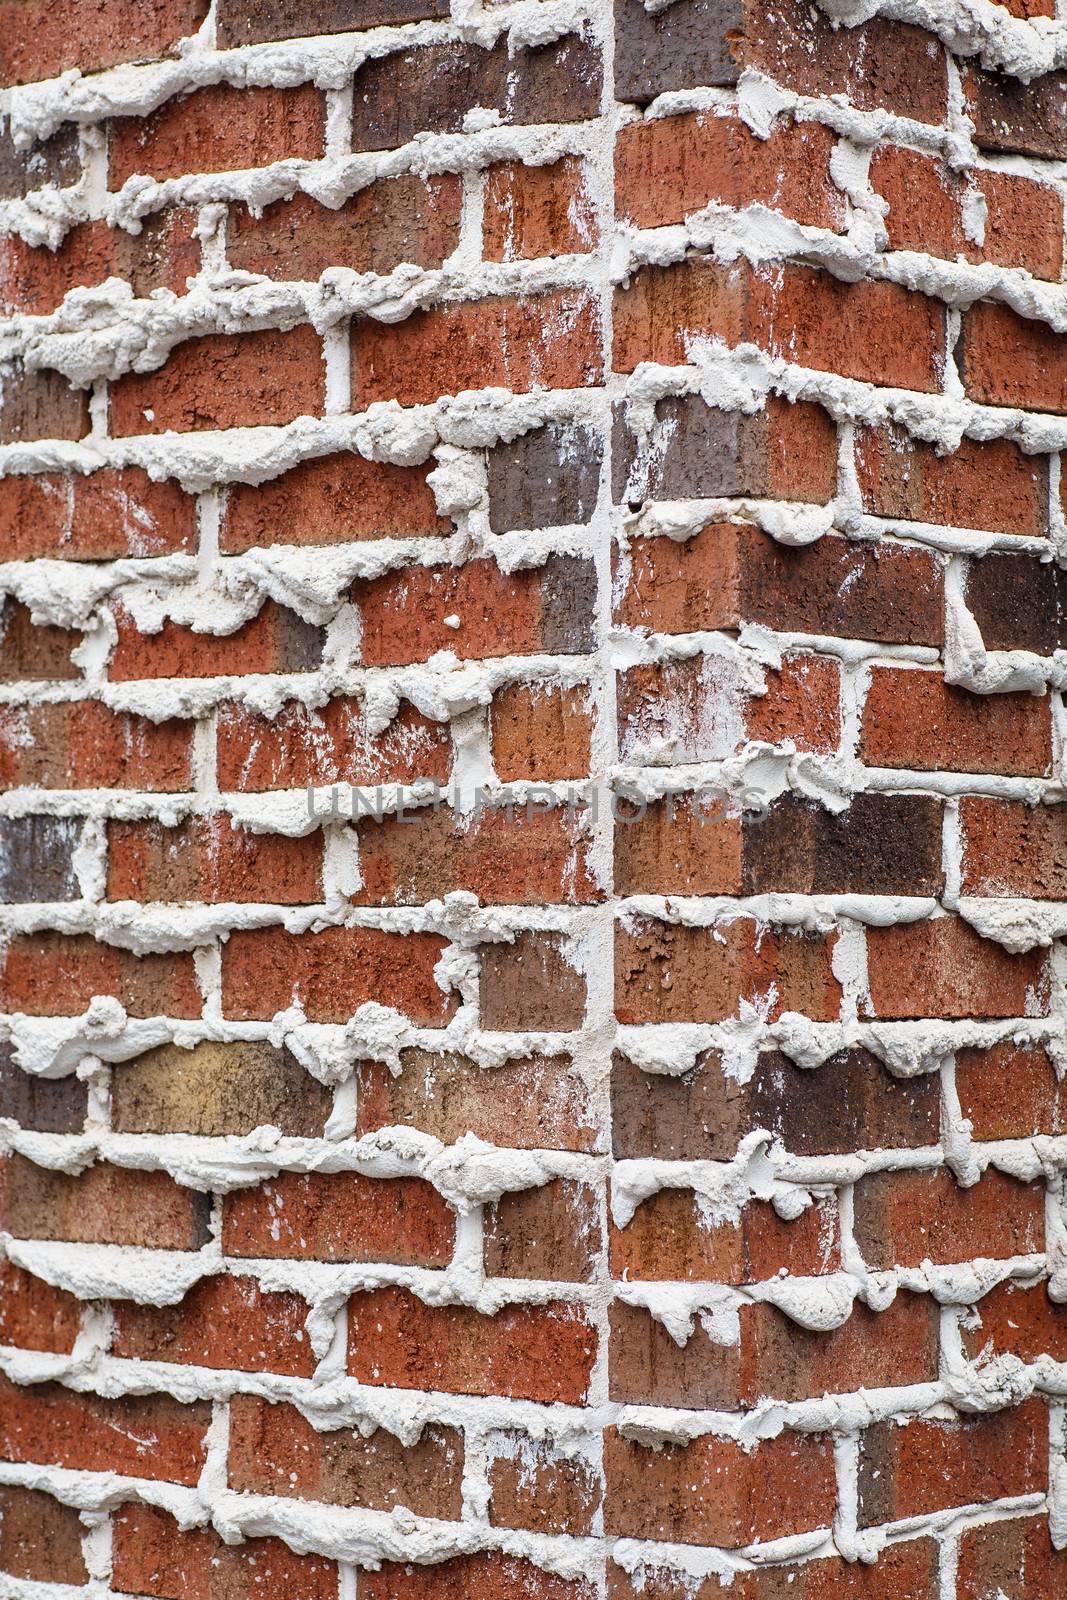 Corner of Brick Wall with Rough Mortar by dbvirago